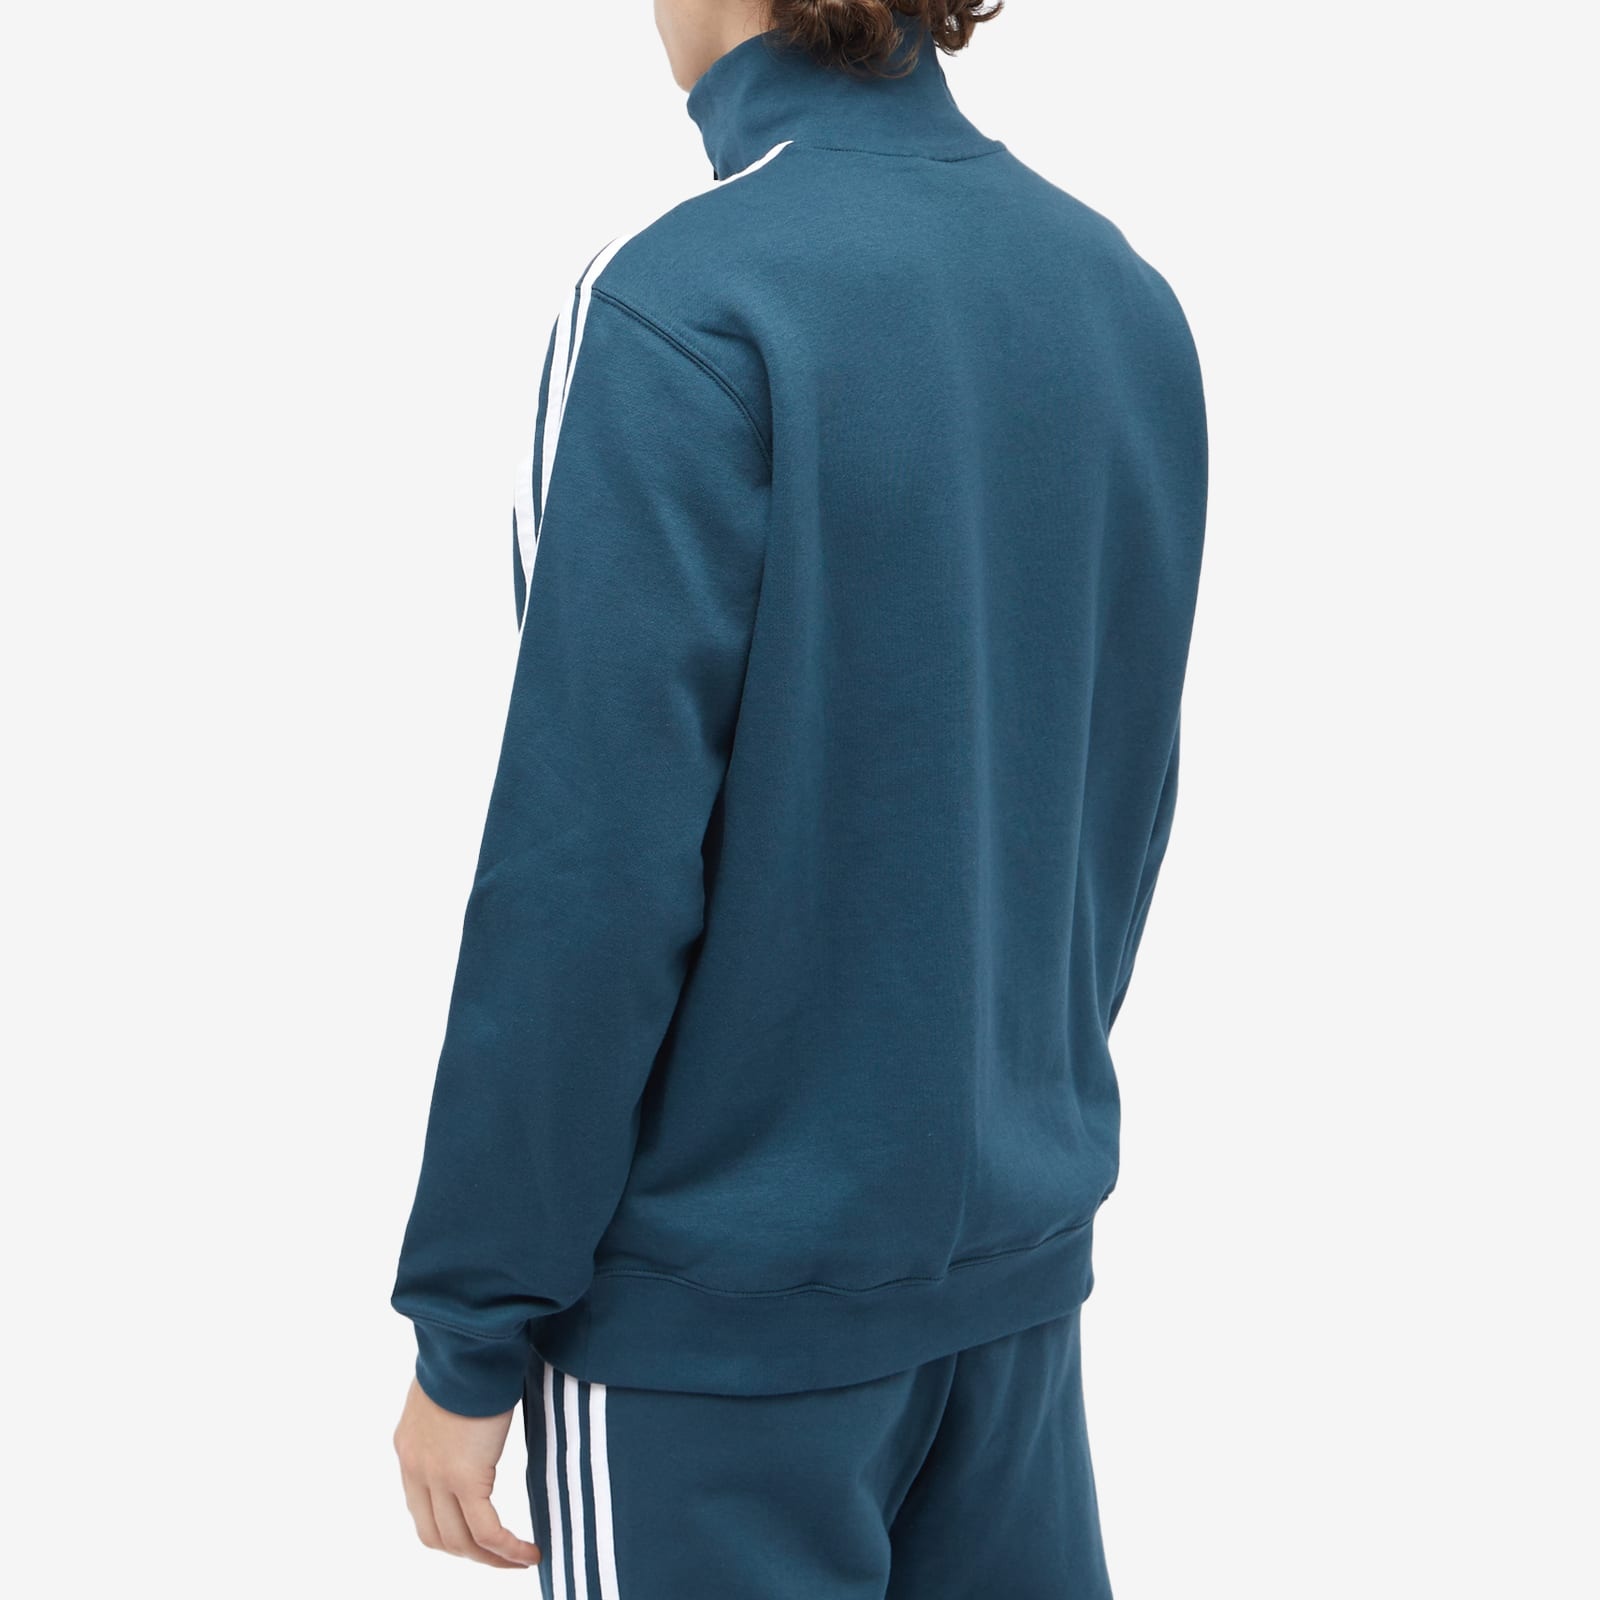 Adidas 3 Stripe Half Zip Crew Sweater - 3